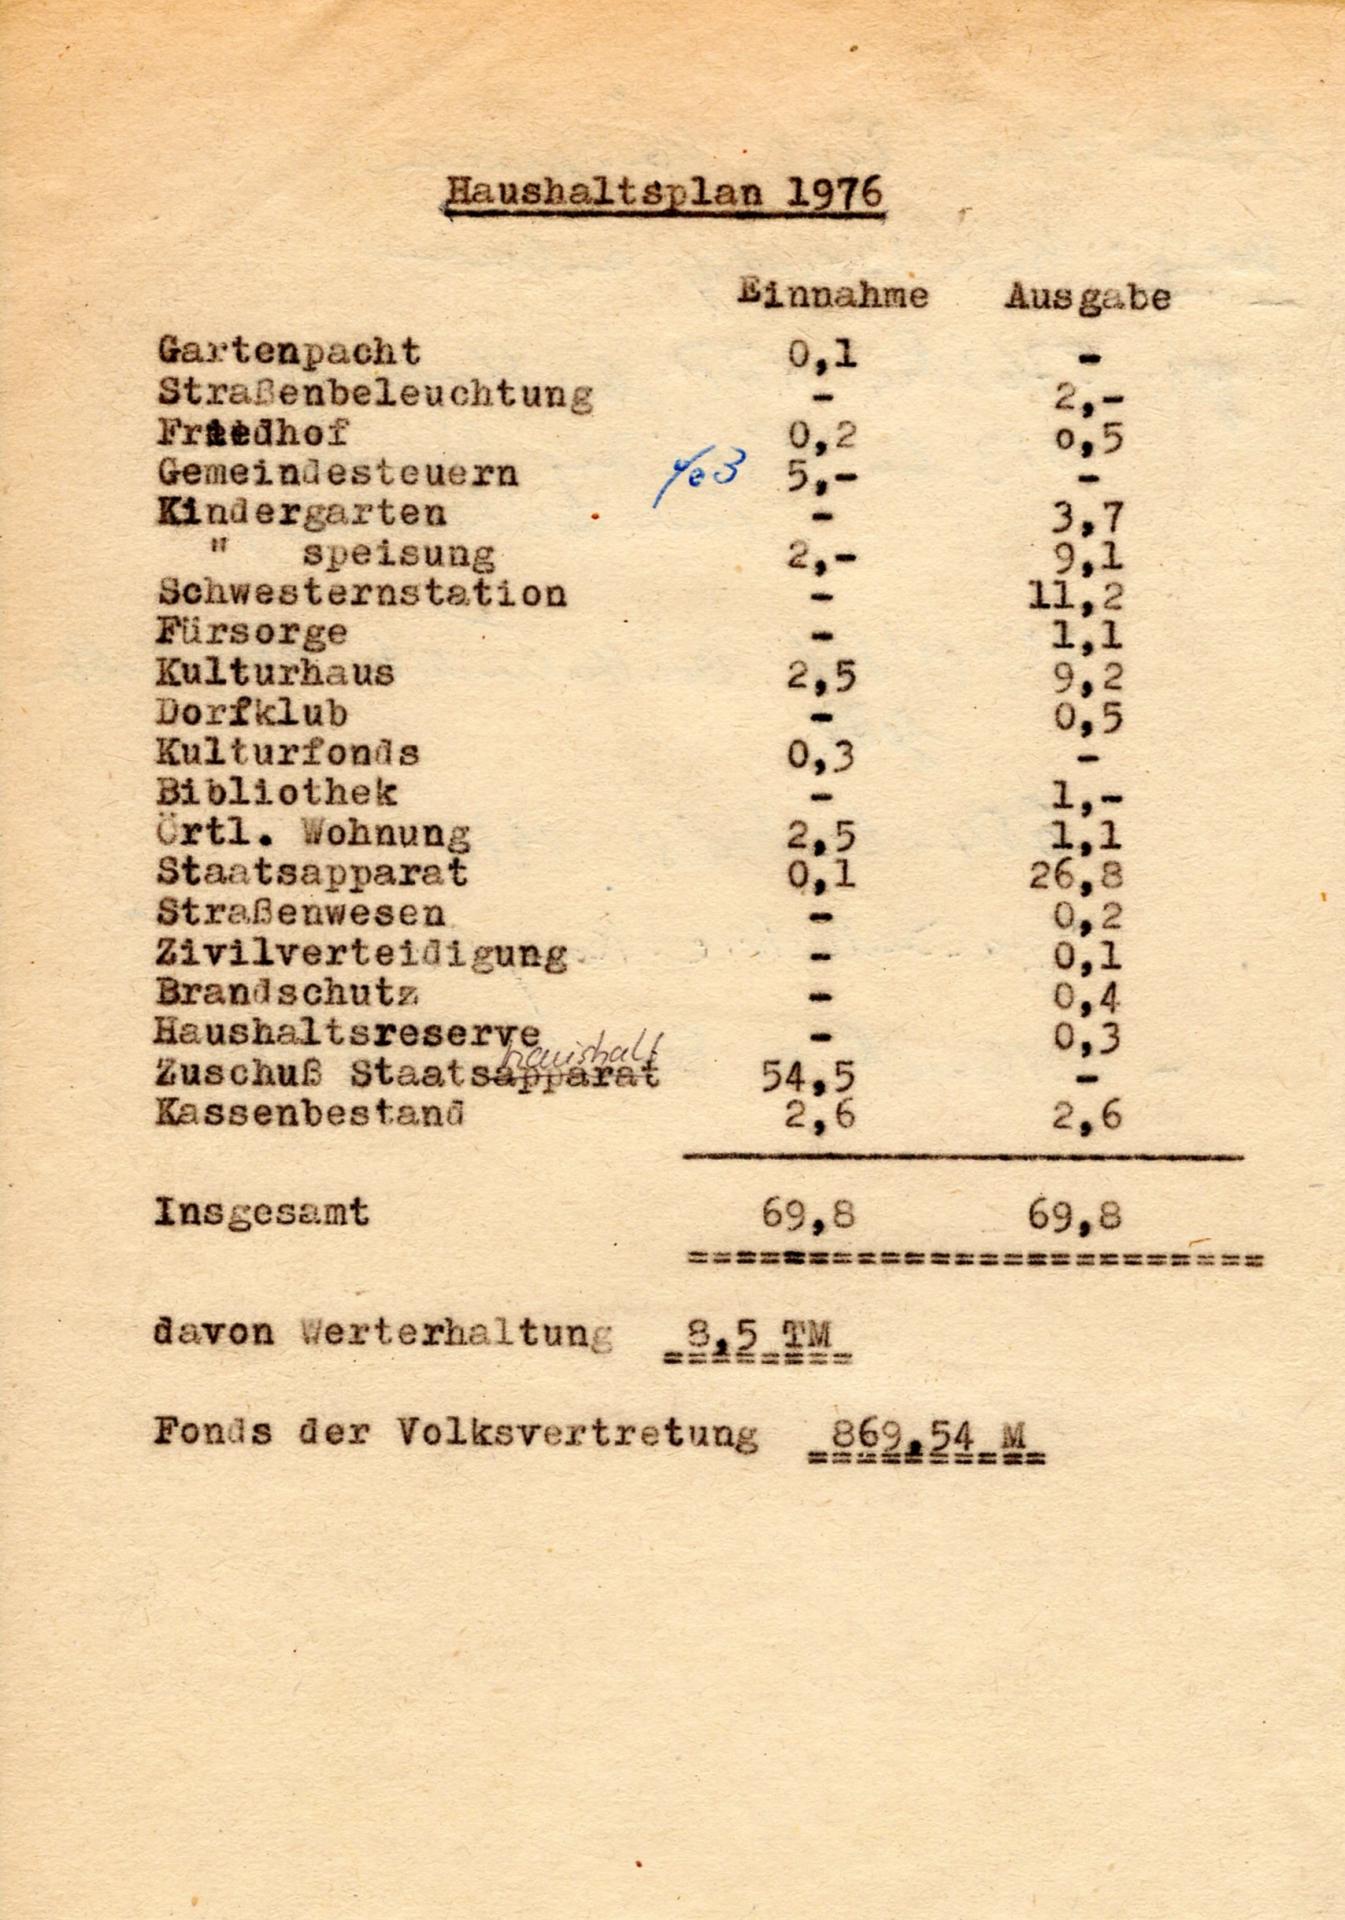 1976_Haushaltsplan_Luedersdorf